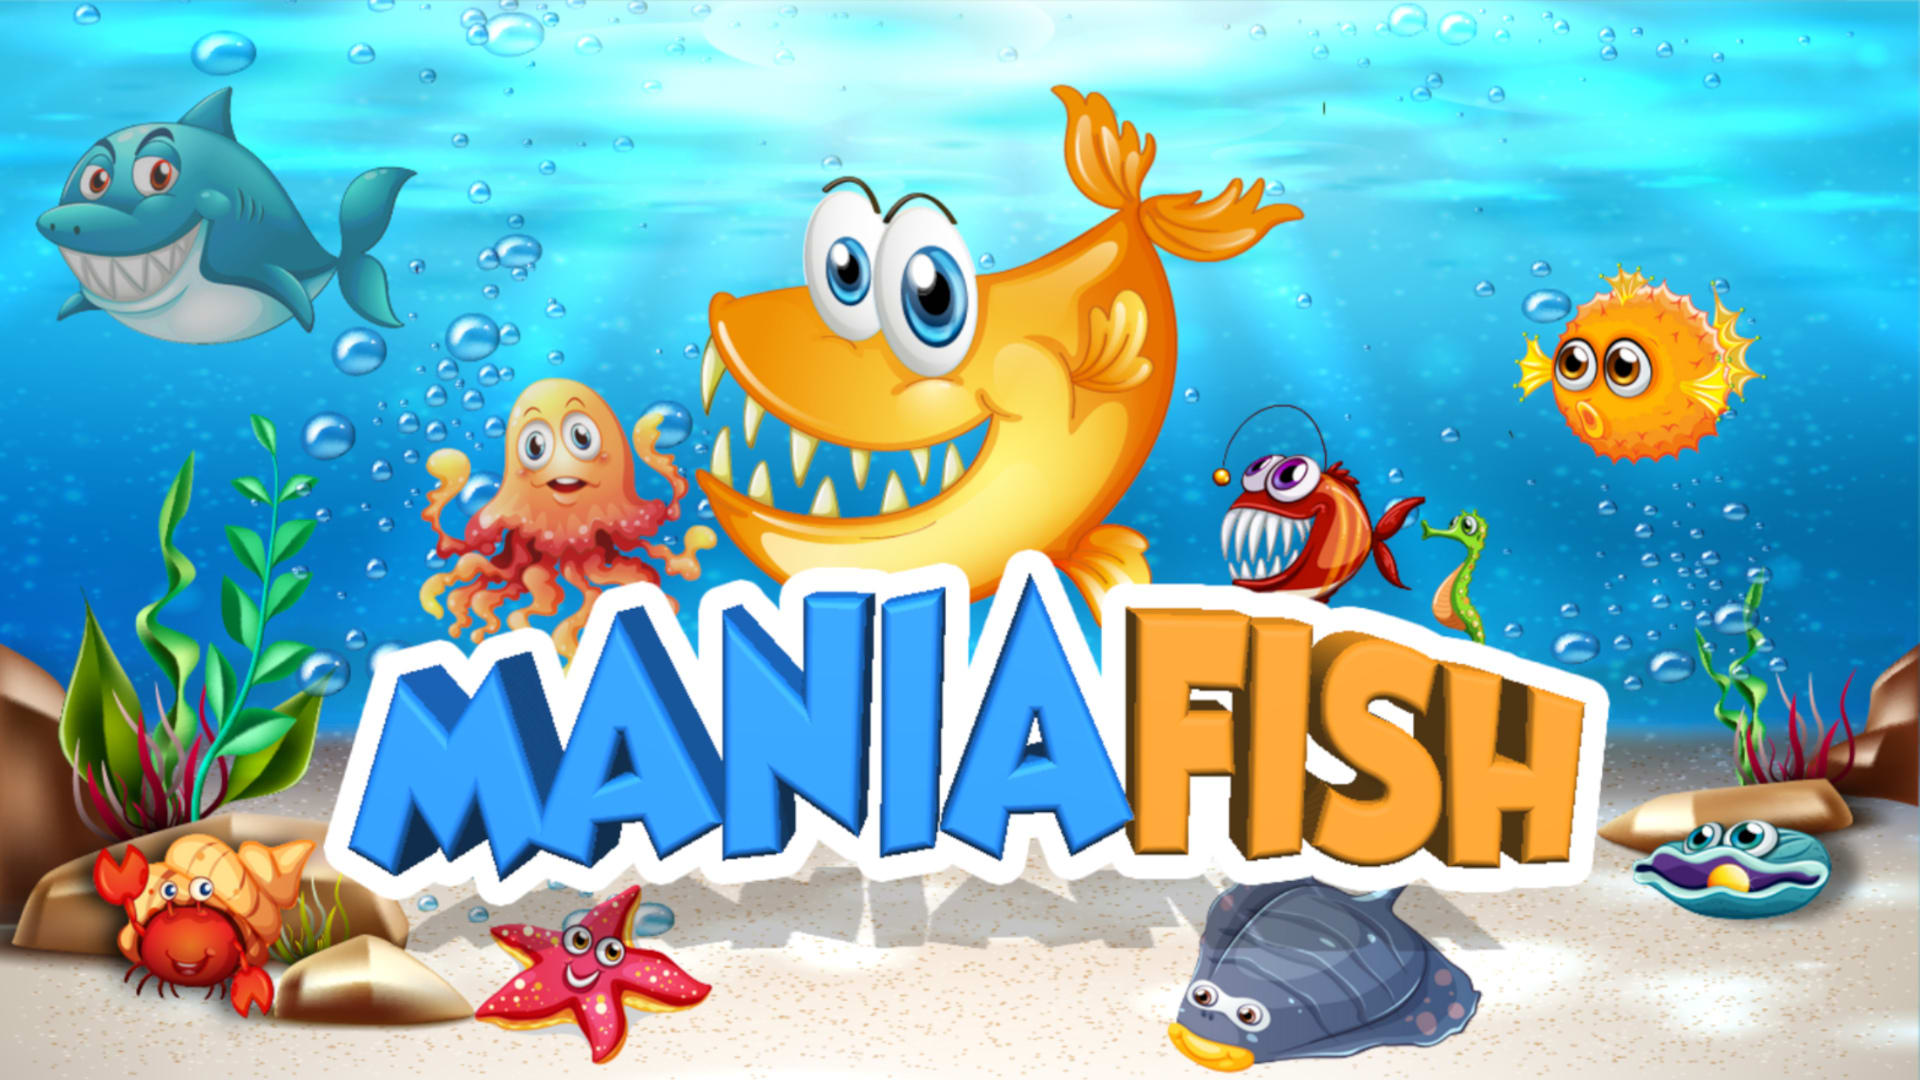 Mania Fish